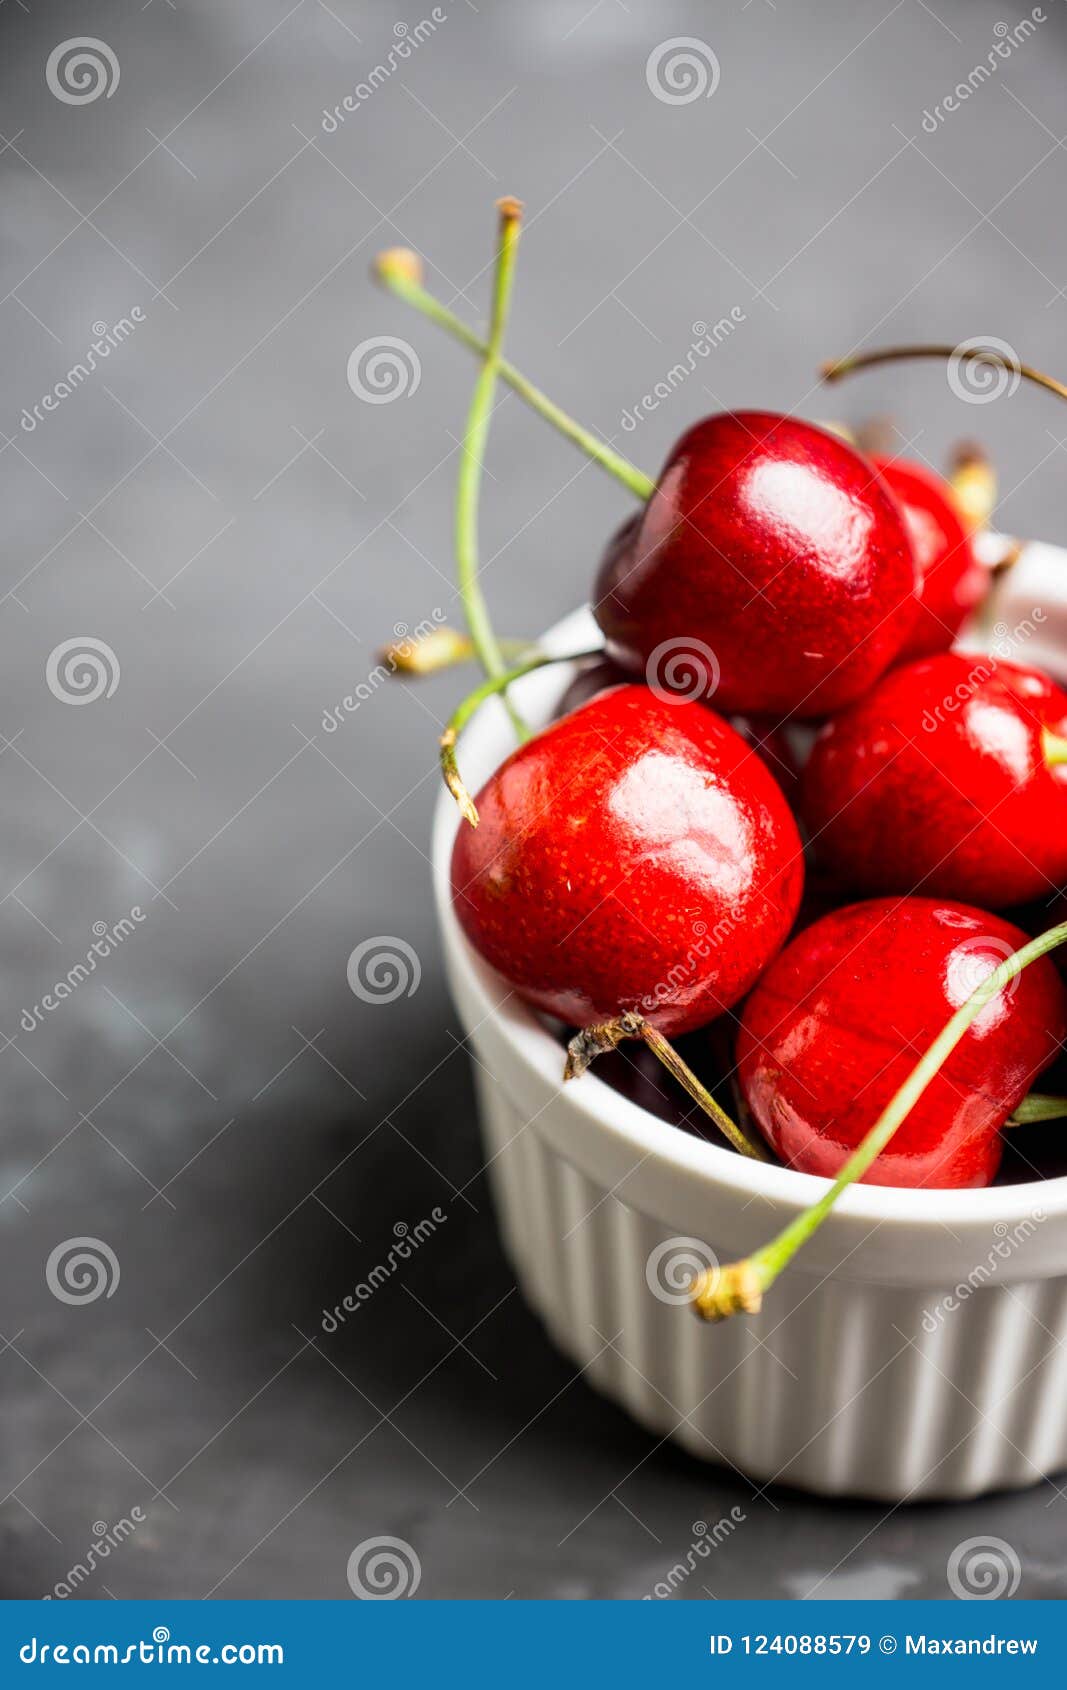 Fresh Ripe Cherries in Small White Ceramic Bowl on the Rustic